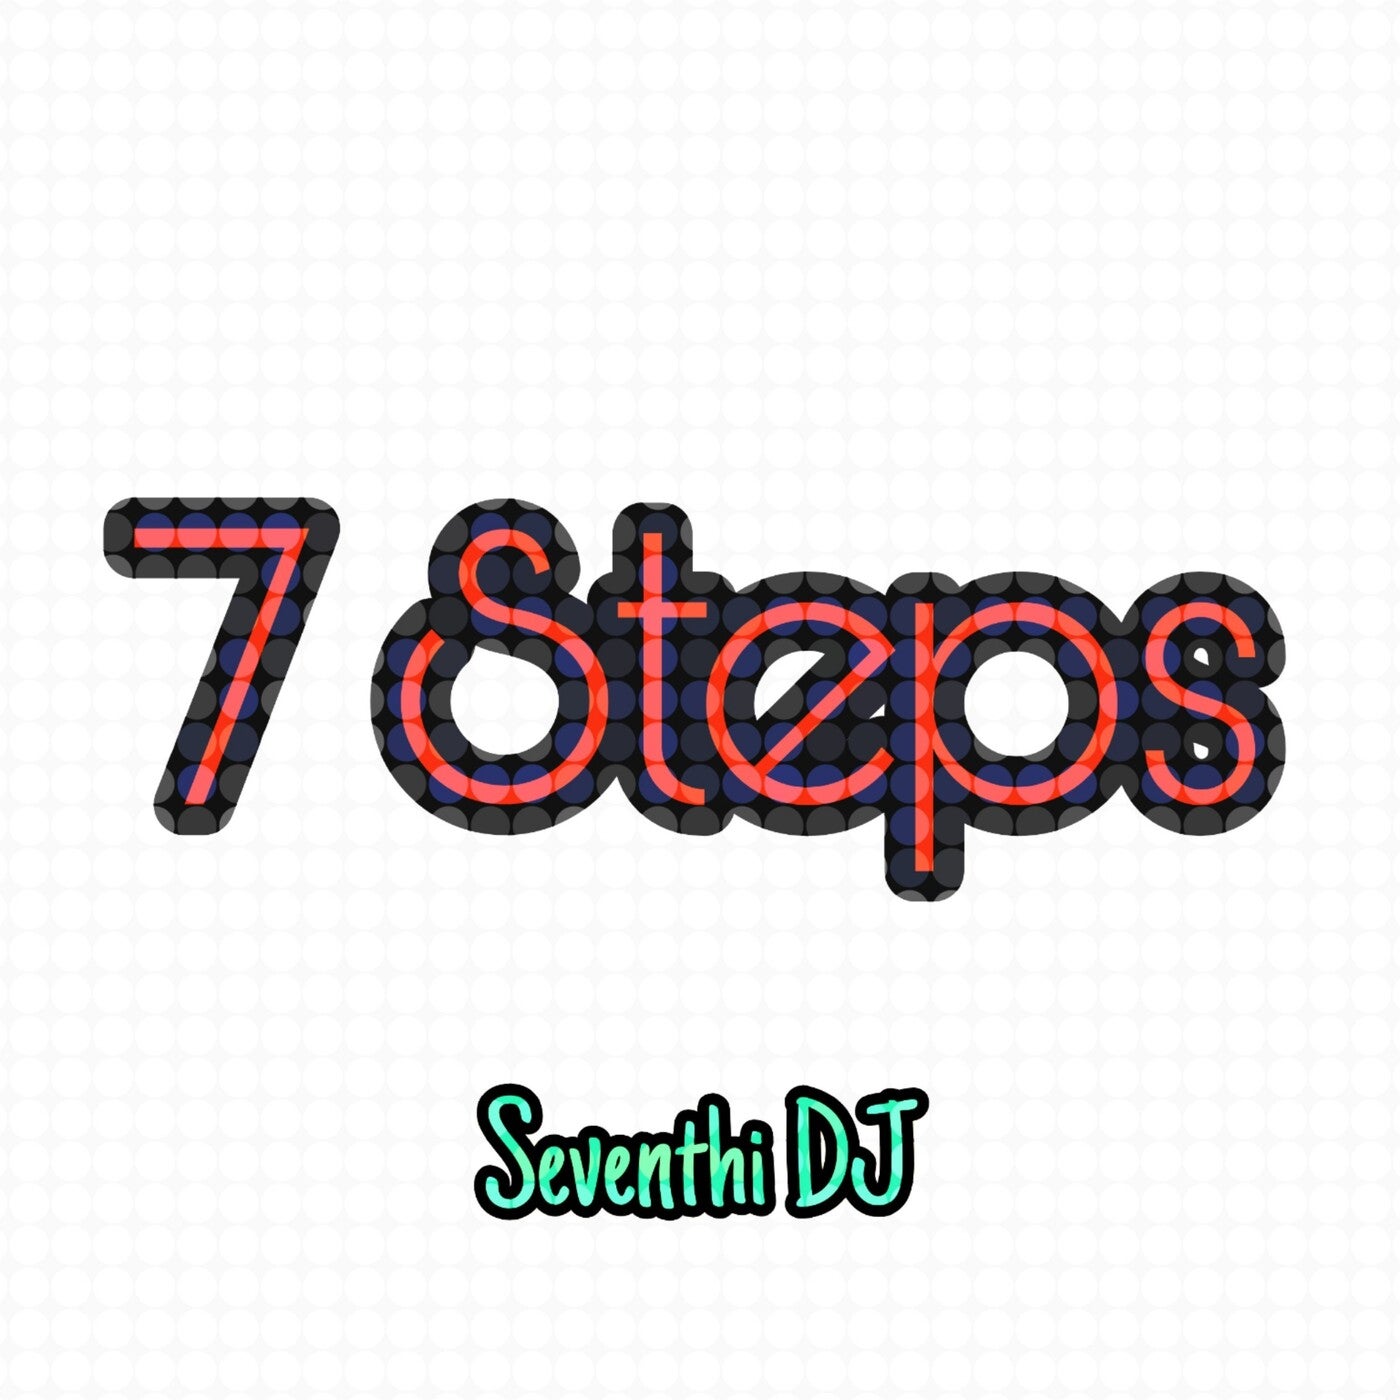 Seventhi DJ music download - Beatport